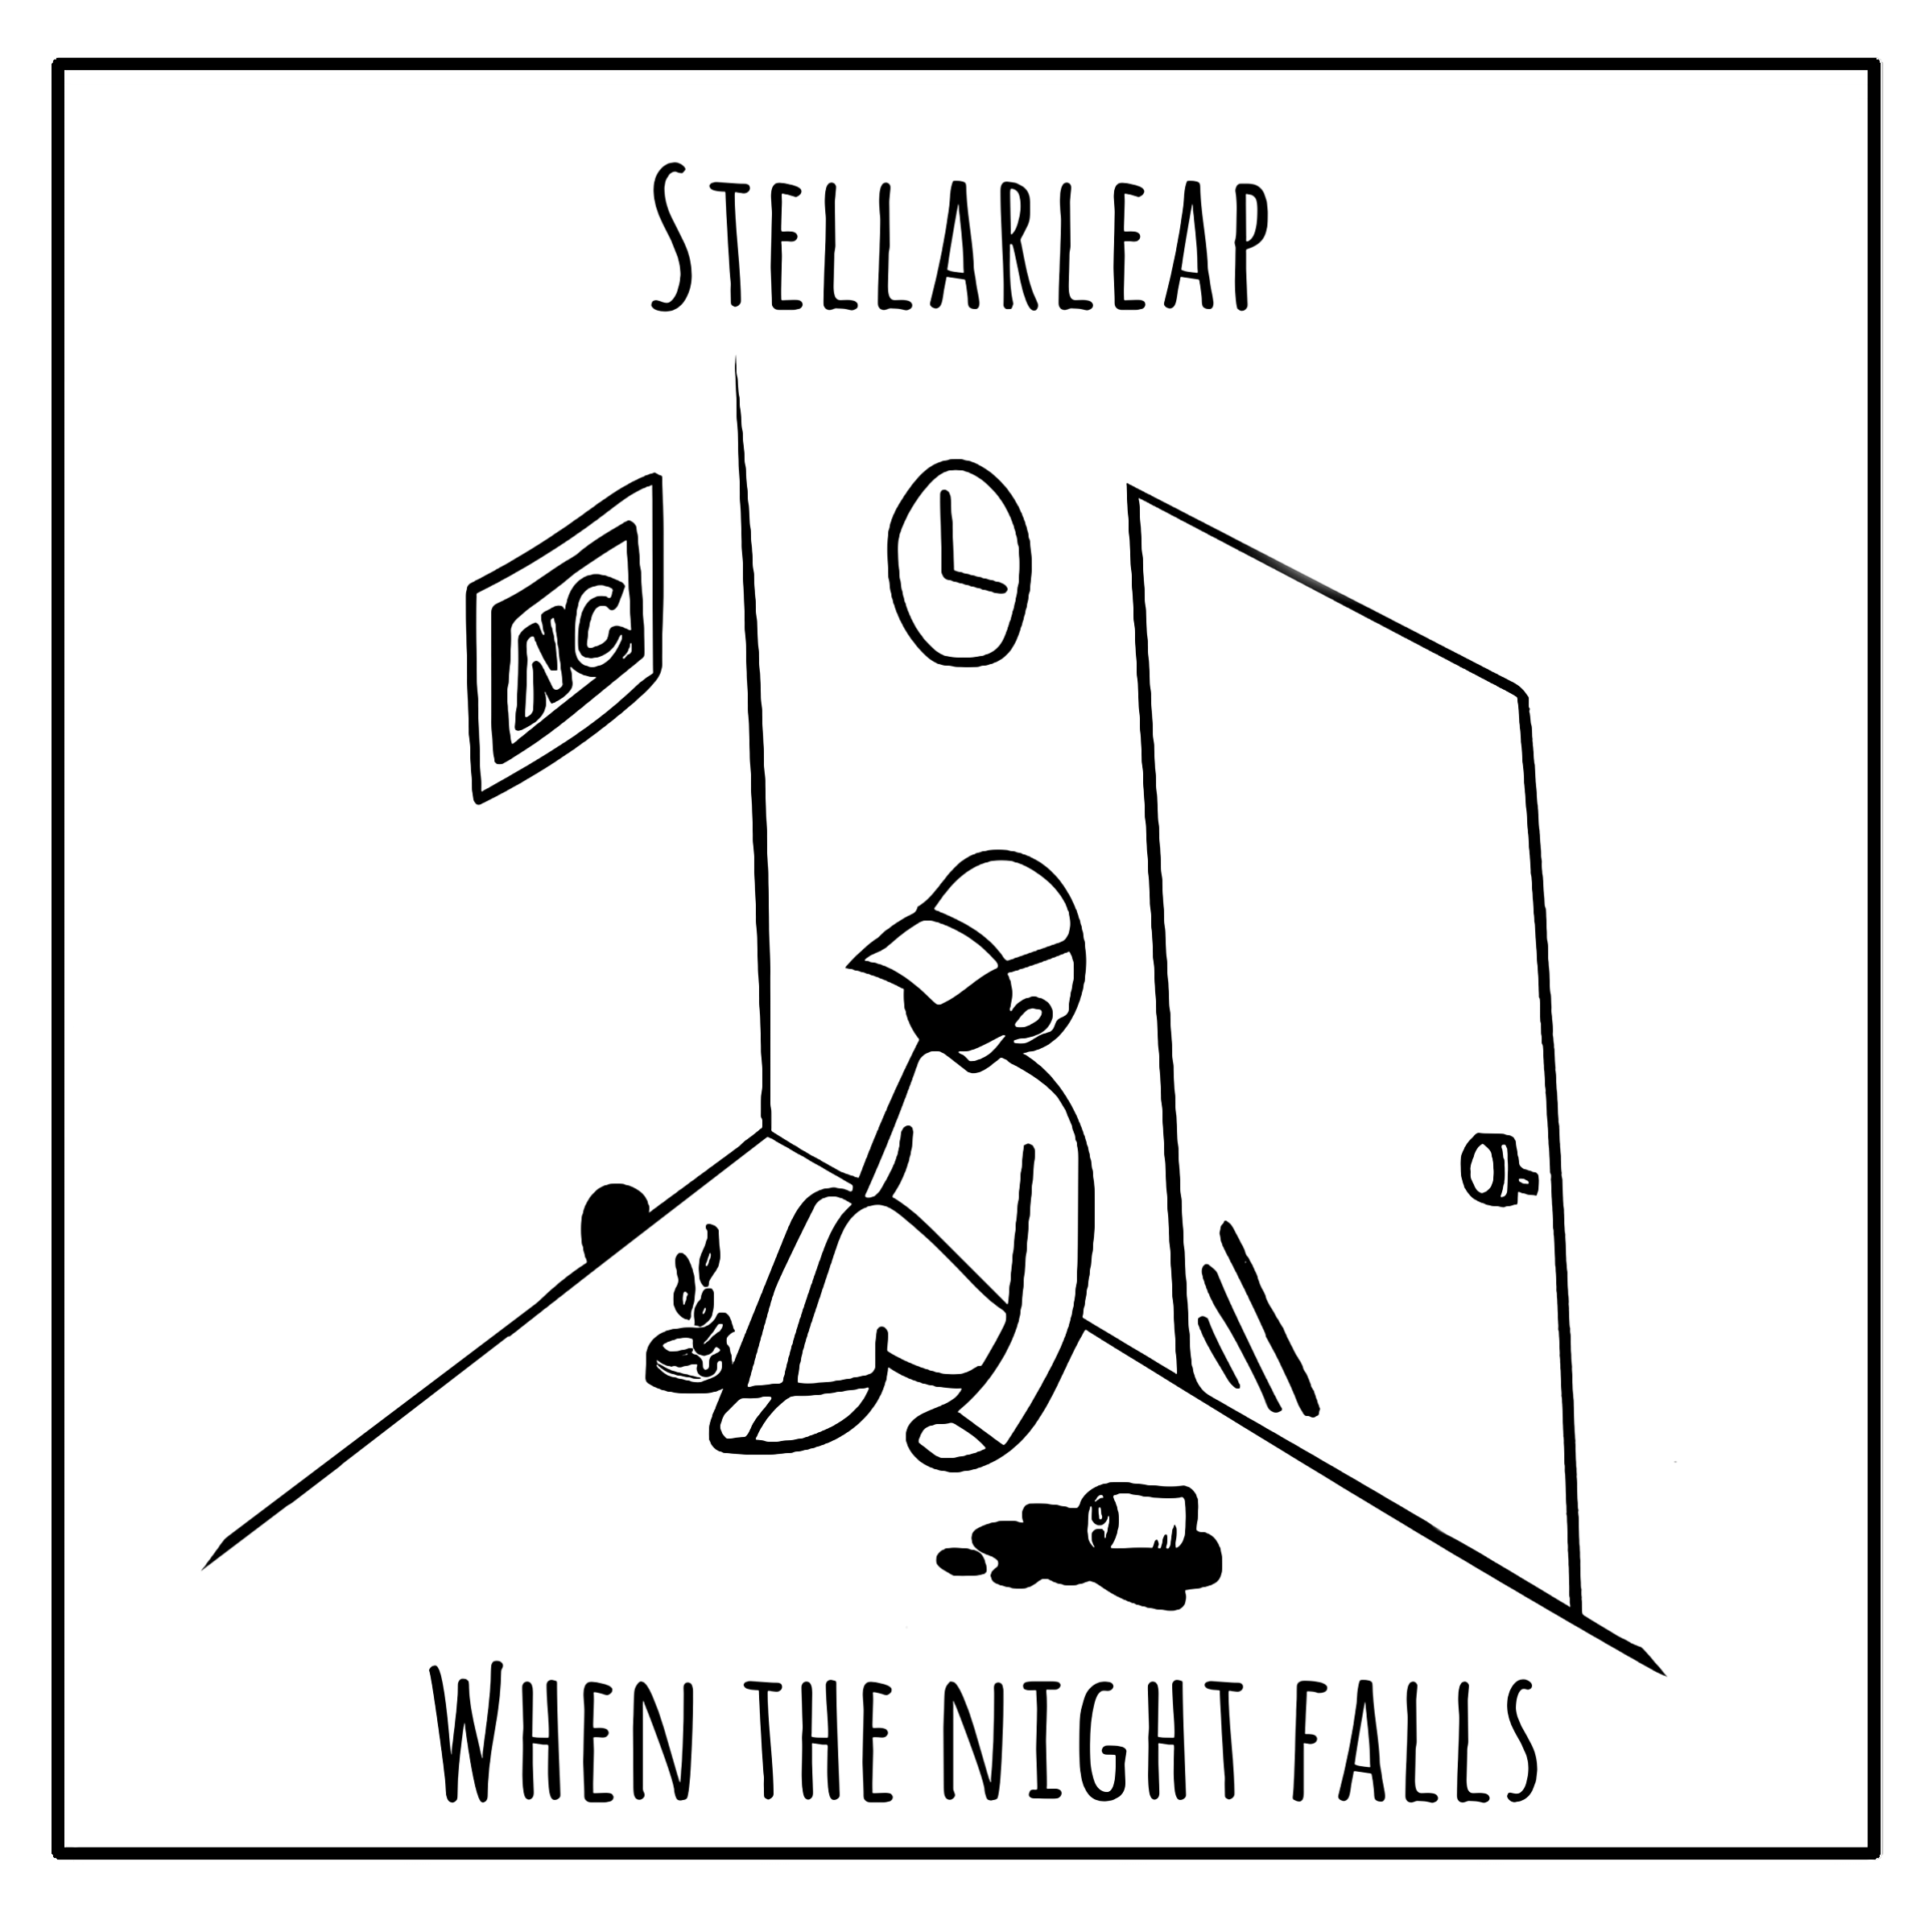 When the night falls